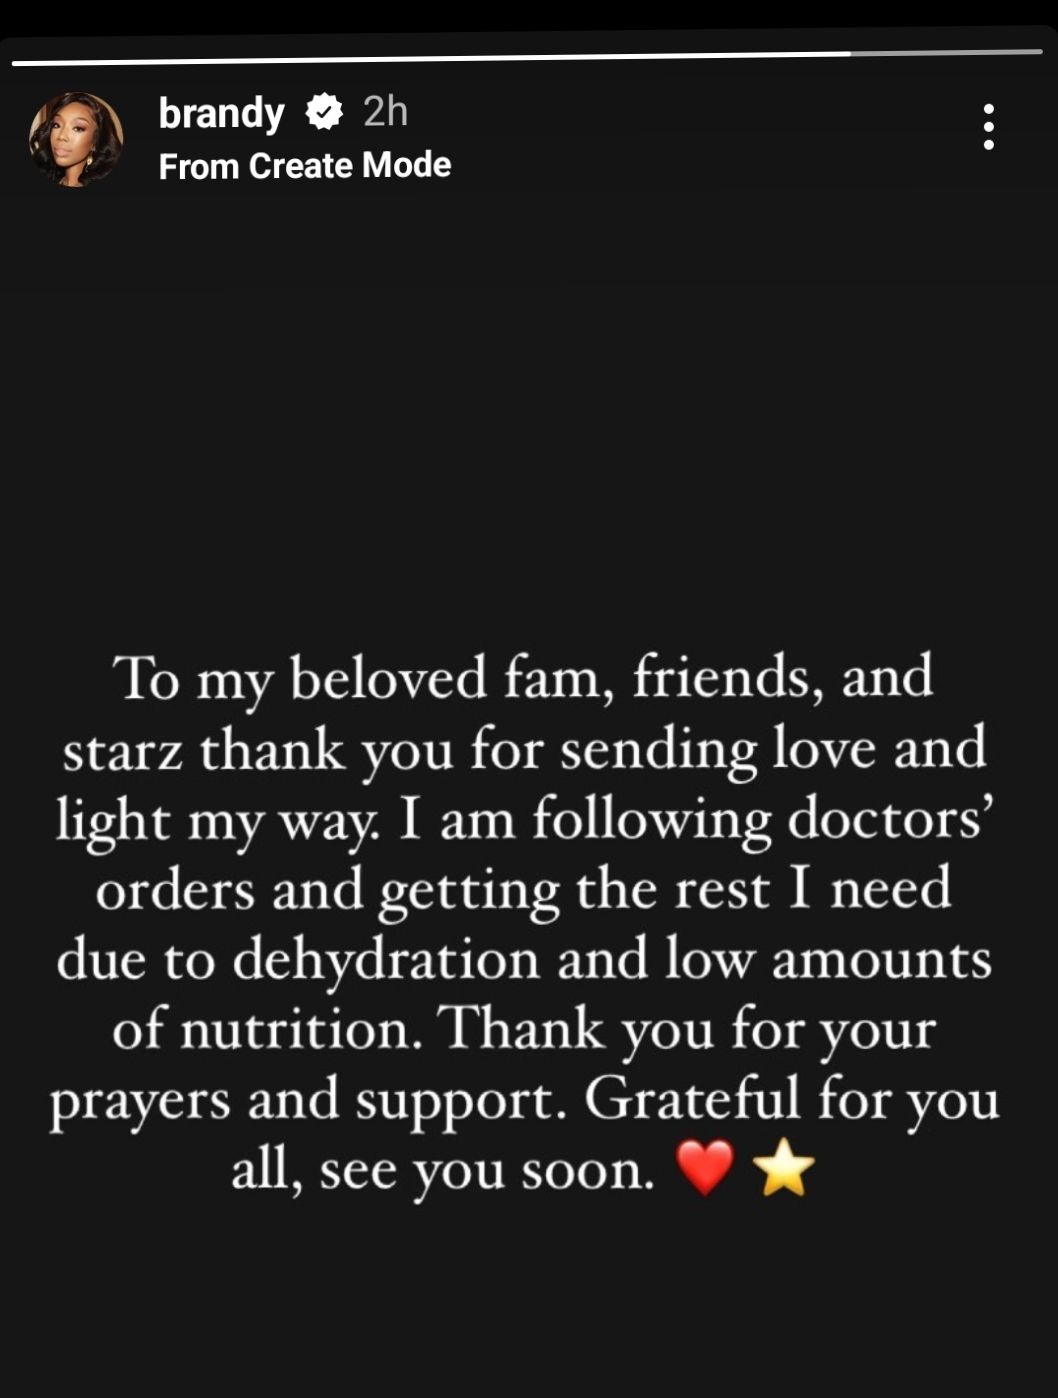 Brandy Hospitalized shares message